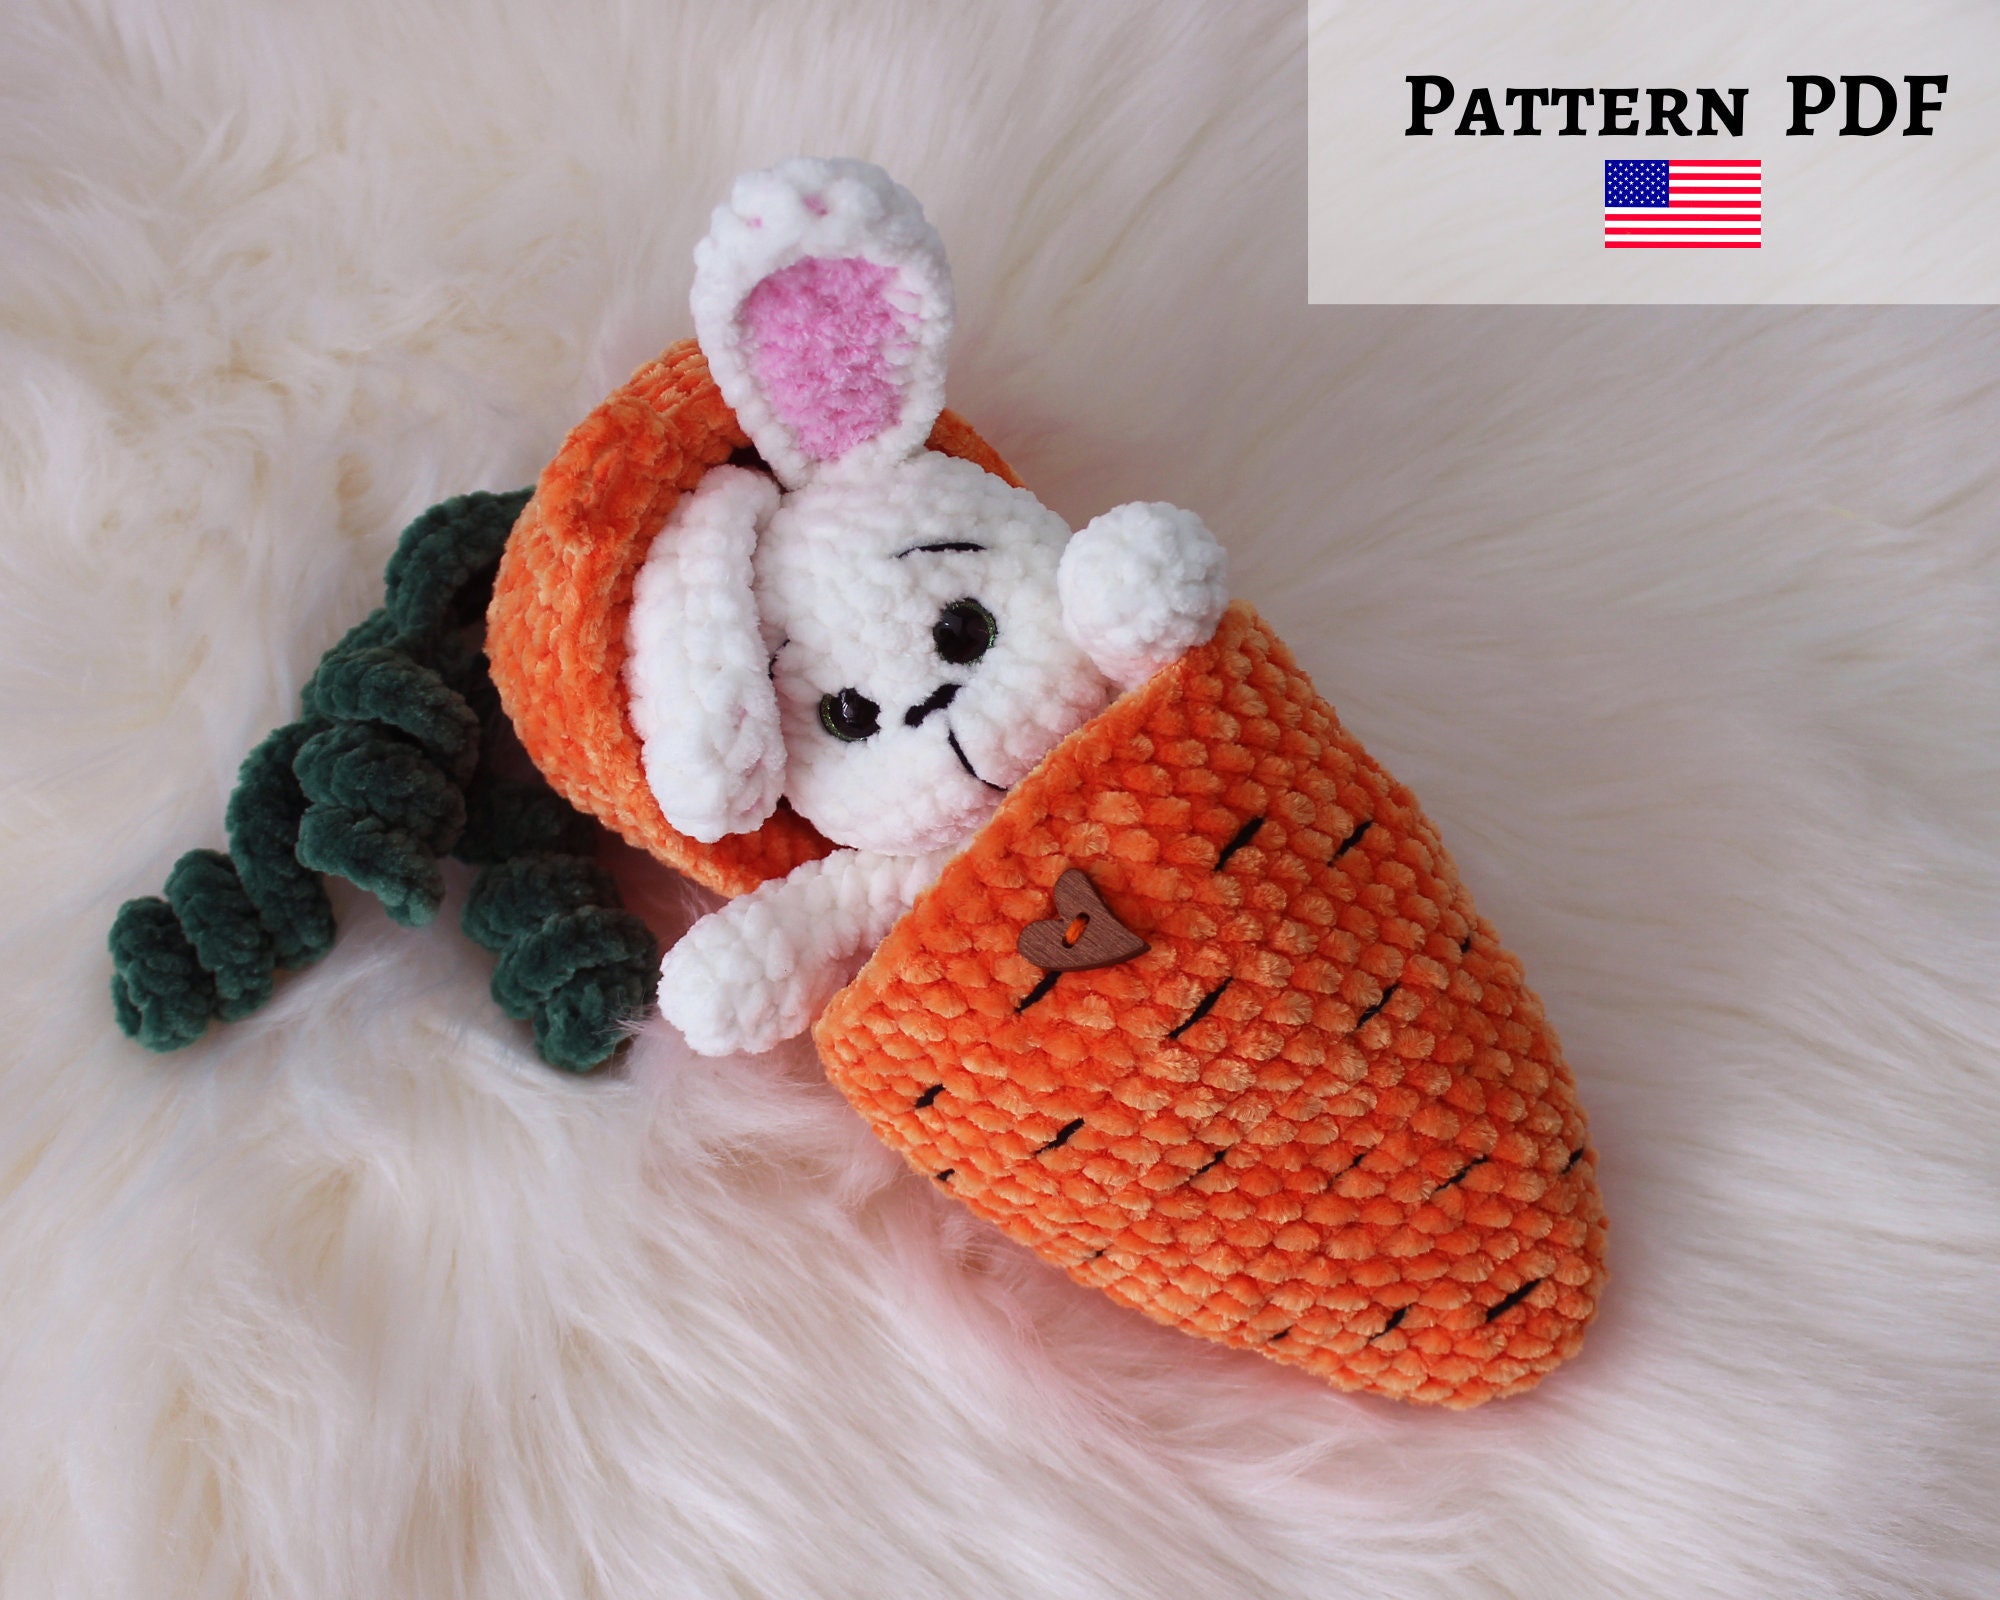 Sleeping Crochet Animals Amigurumi Crochet Pattern PDF, Eng, Ger